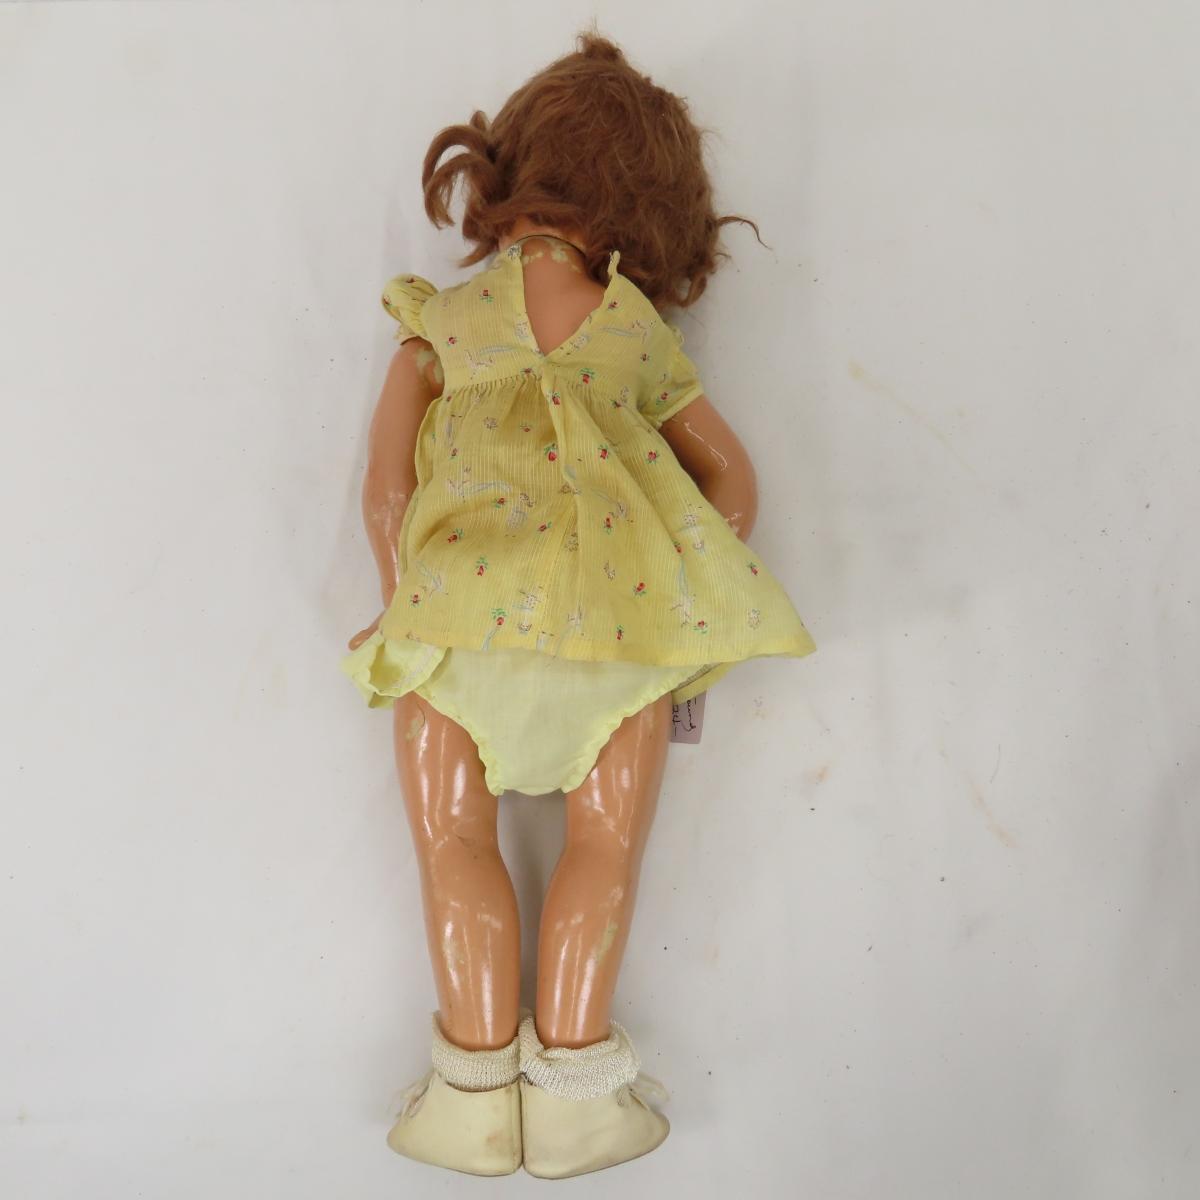 Vintage Dolls & accessories, some need repair